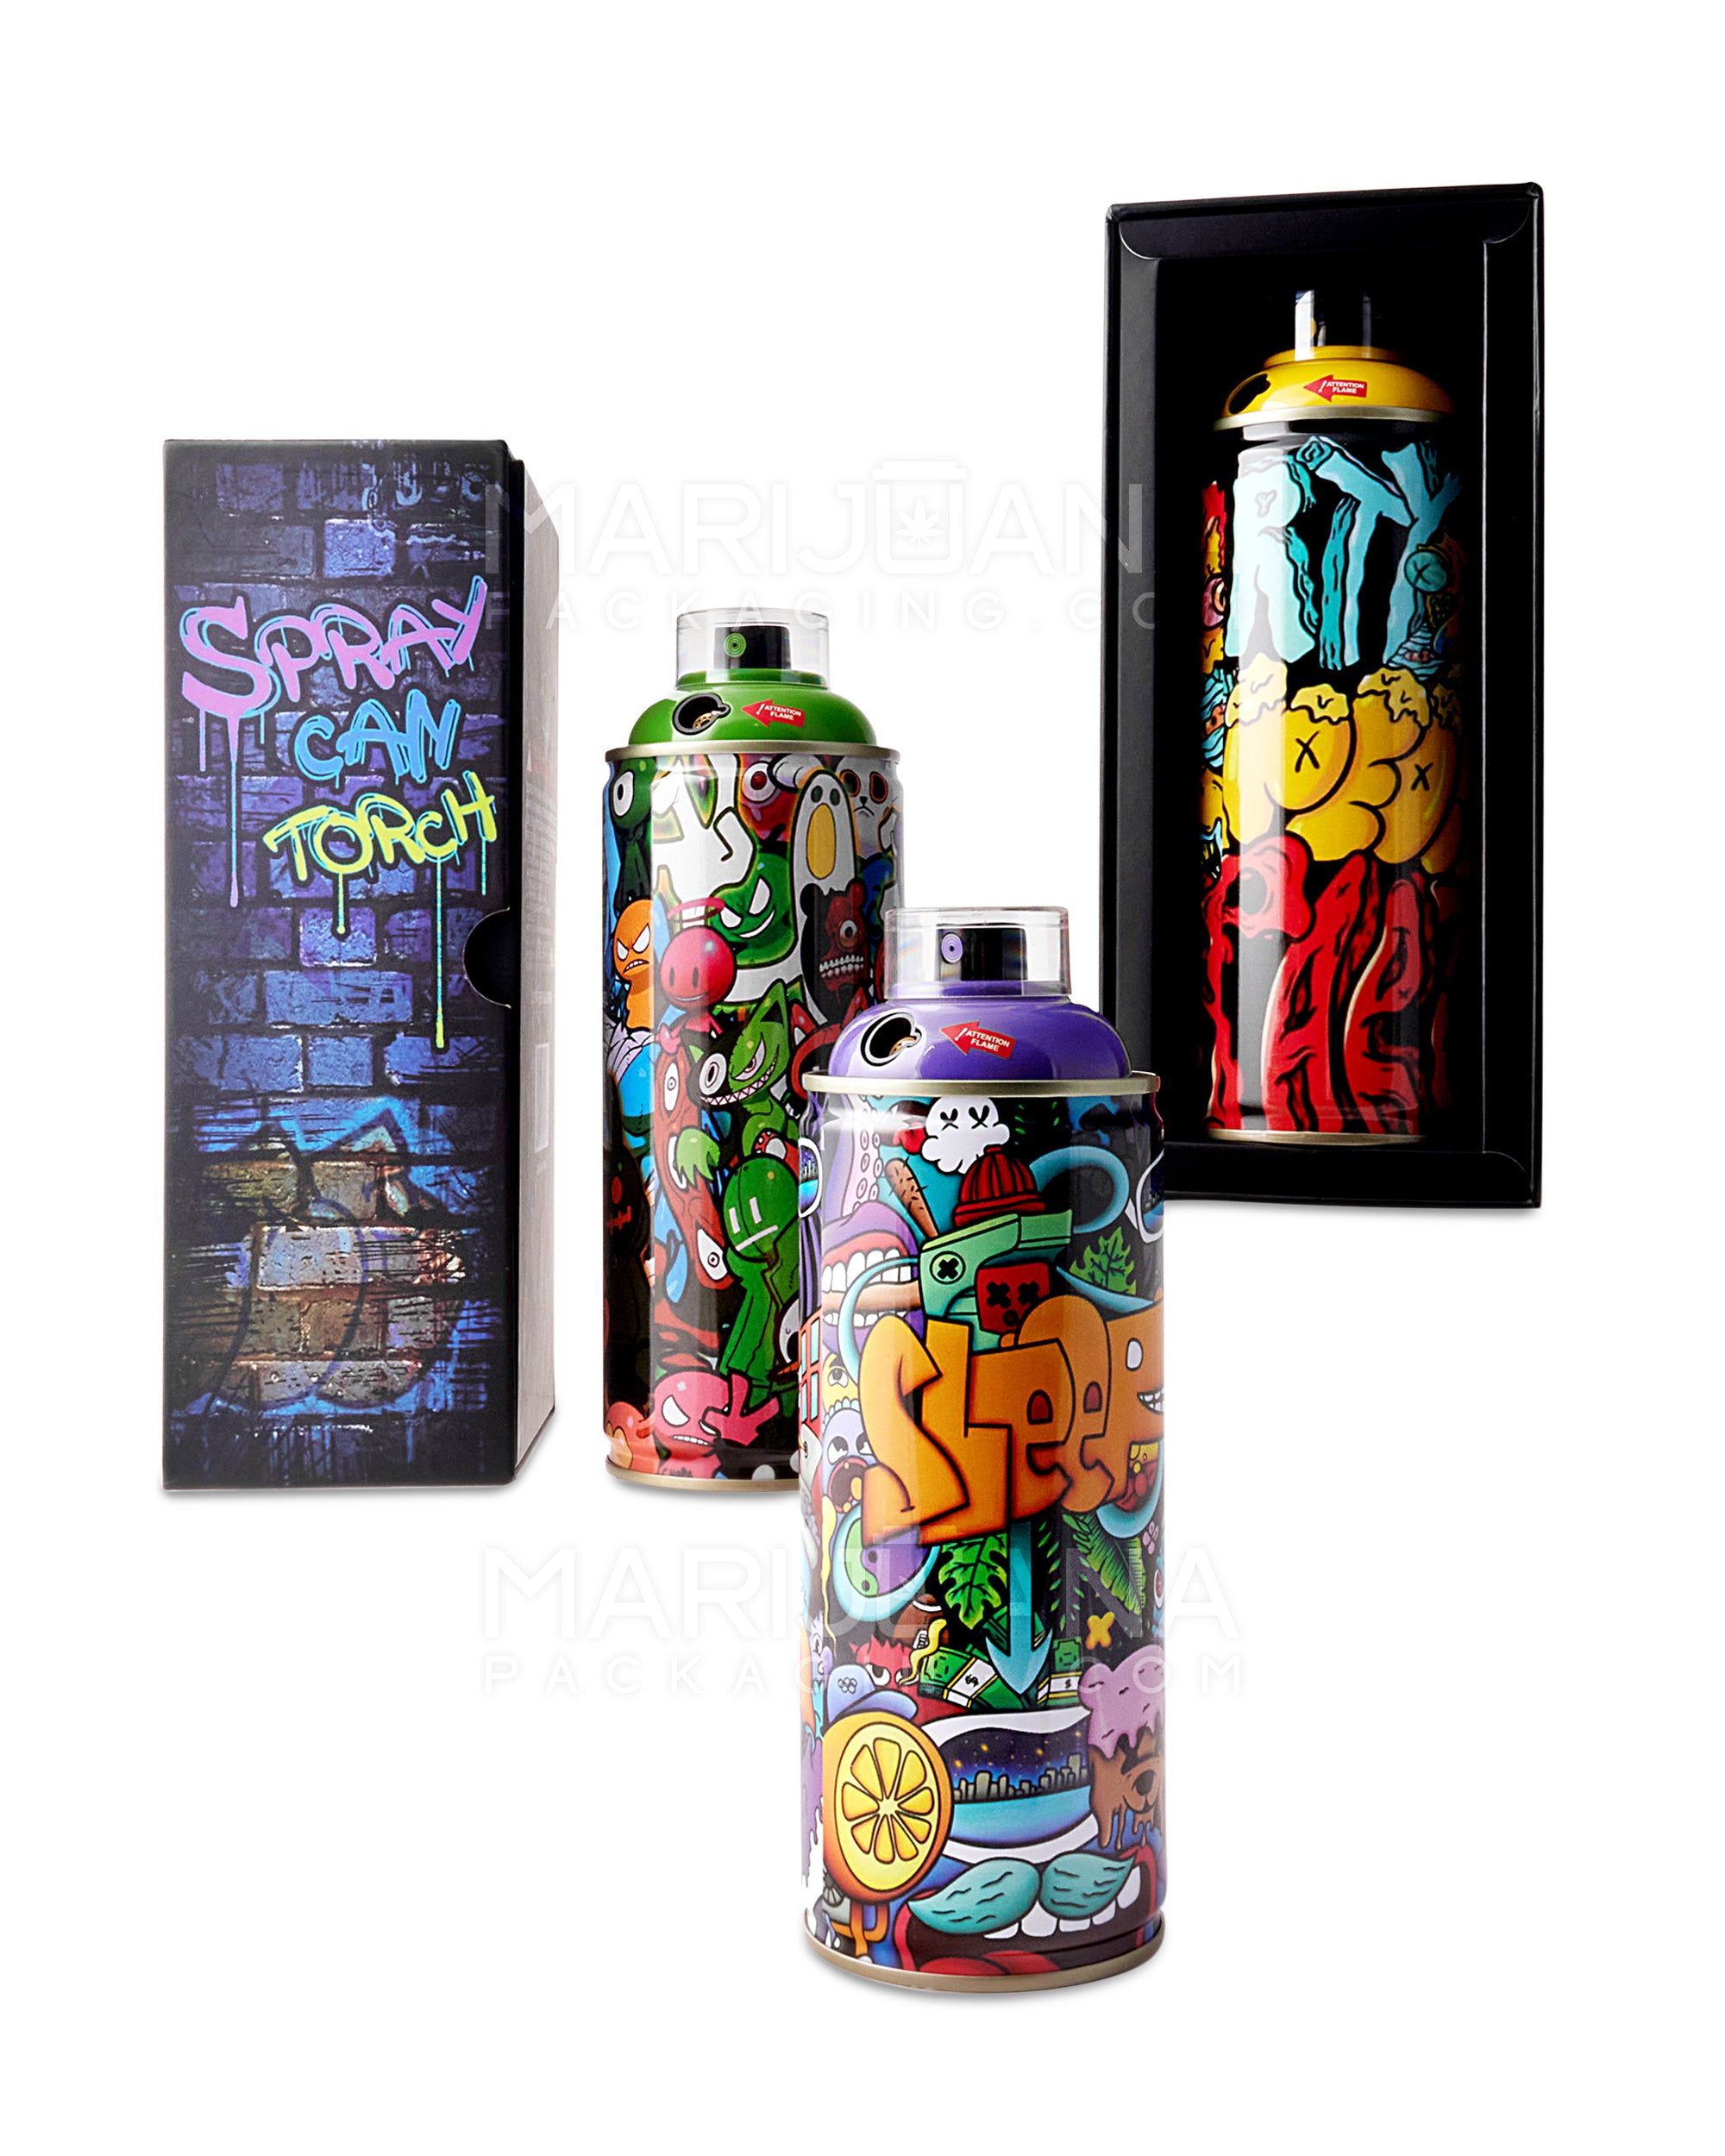 TECHNO TORCH | Graffiti Art Design Aluminum Spray Can Flame Torch | 7.5in Tall - Butane - Green